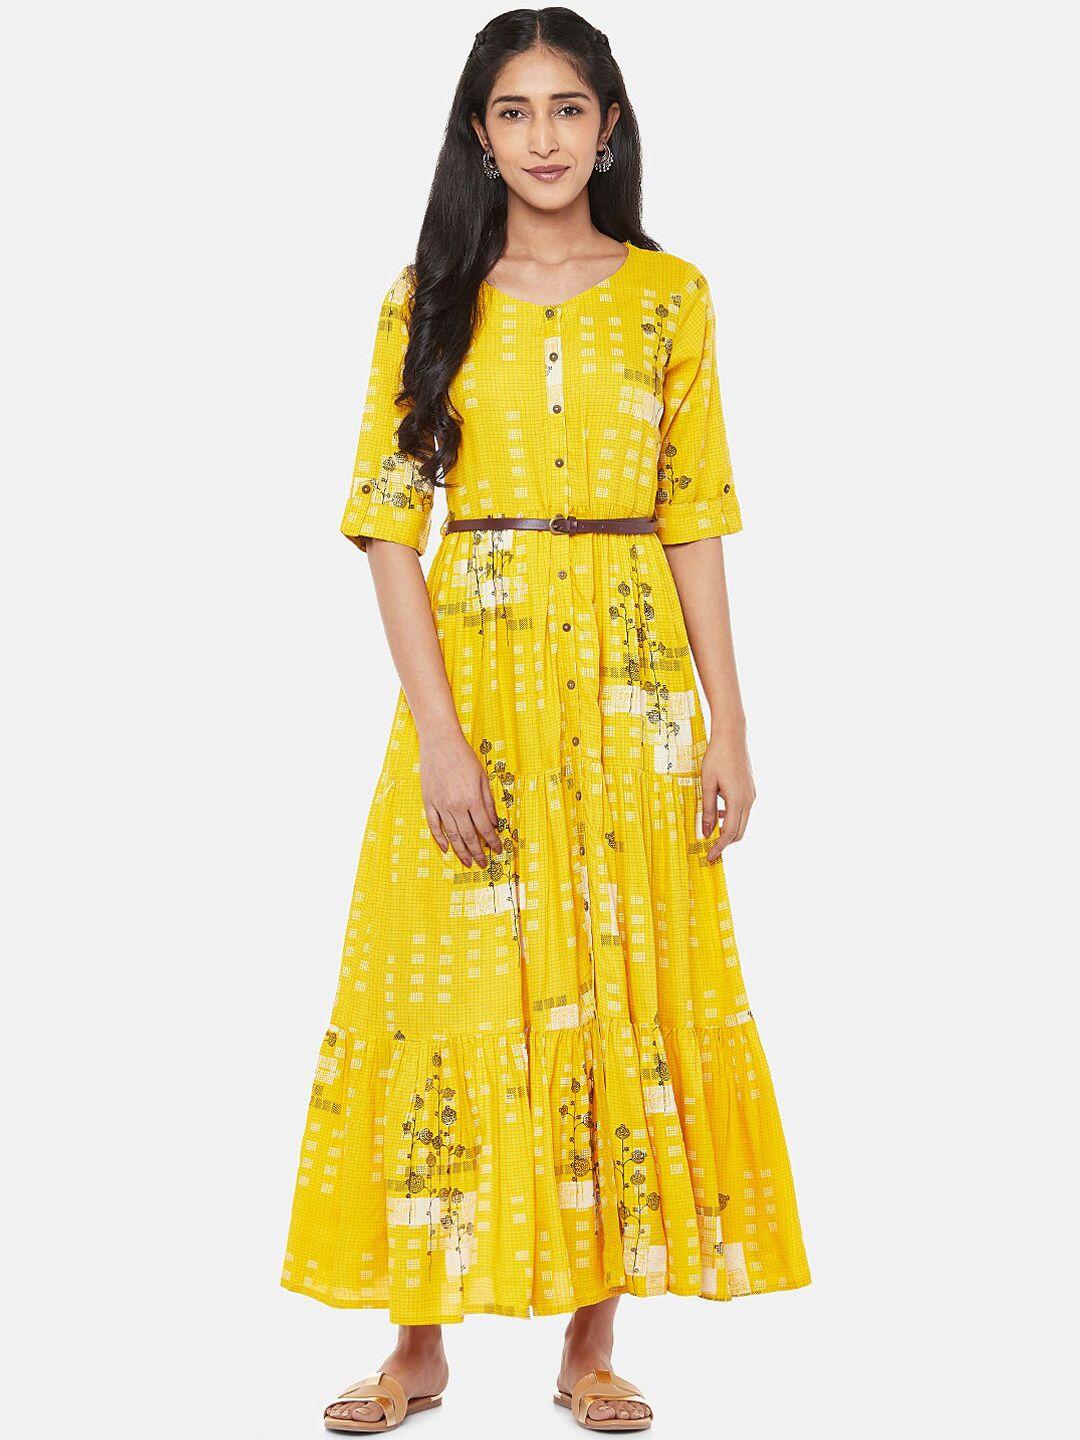 akkriti-by-pantaloons-women-mustard-yellow-&-off-white-floral-printed-maxi-dress